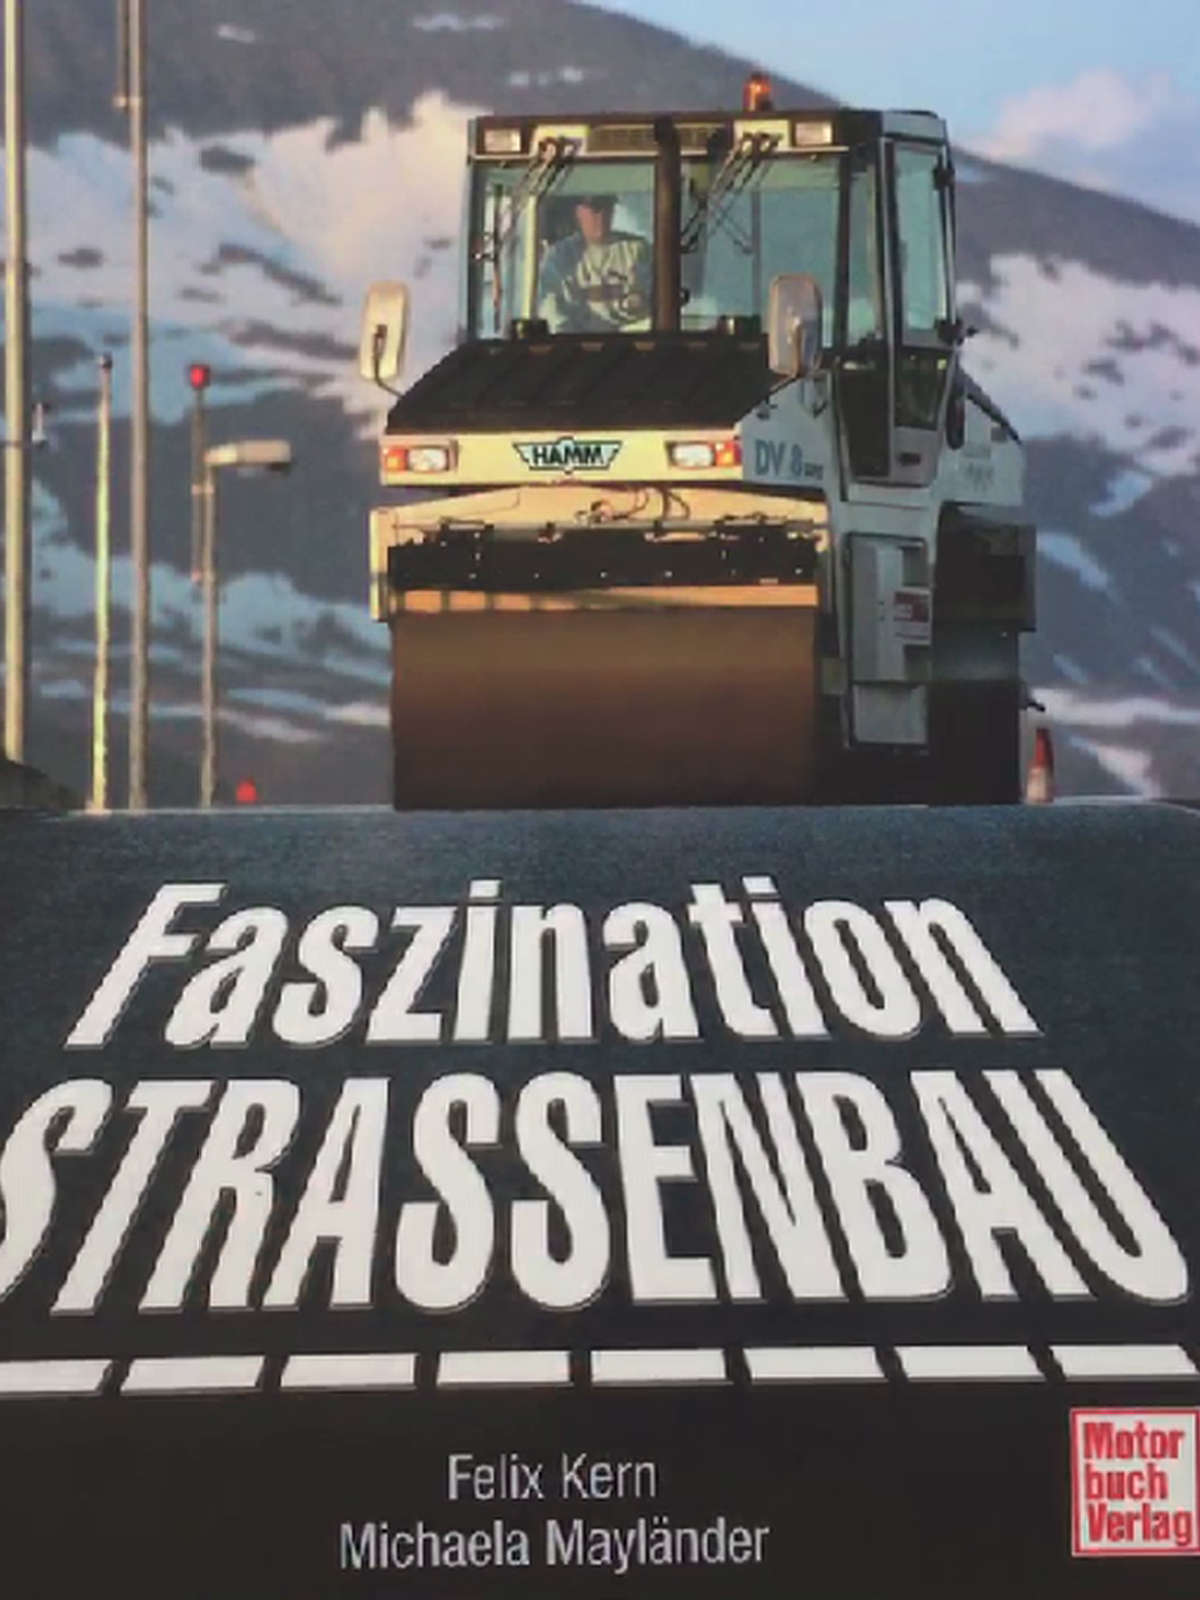 Faszination Straßenbau - Felix Kern - Michaela Mayländer